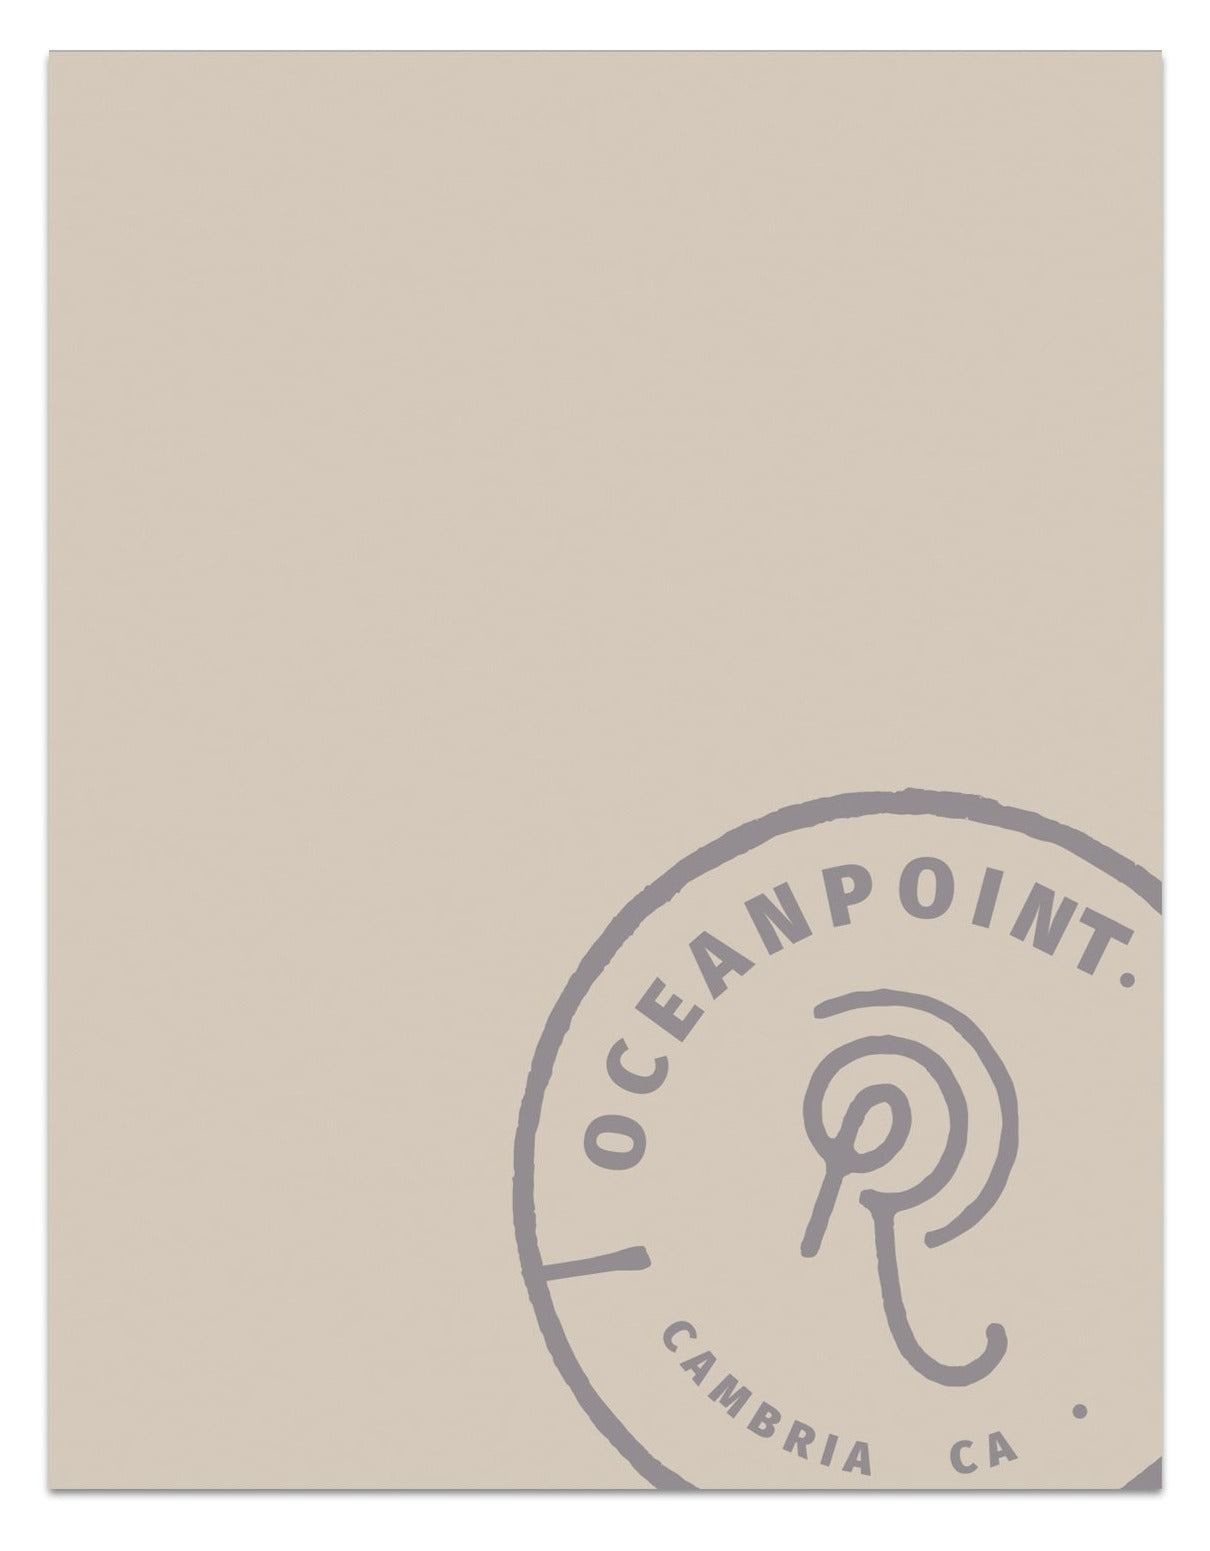 Oceanpoint Ranch Custom Notepads (500 Notepads per box / $140 per box)